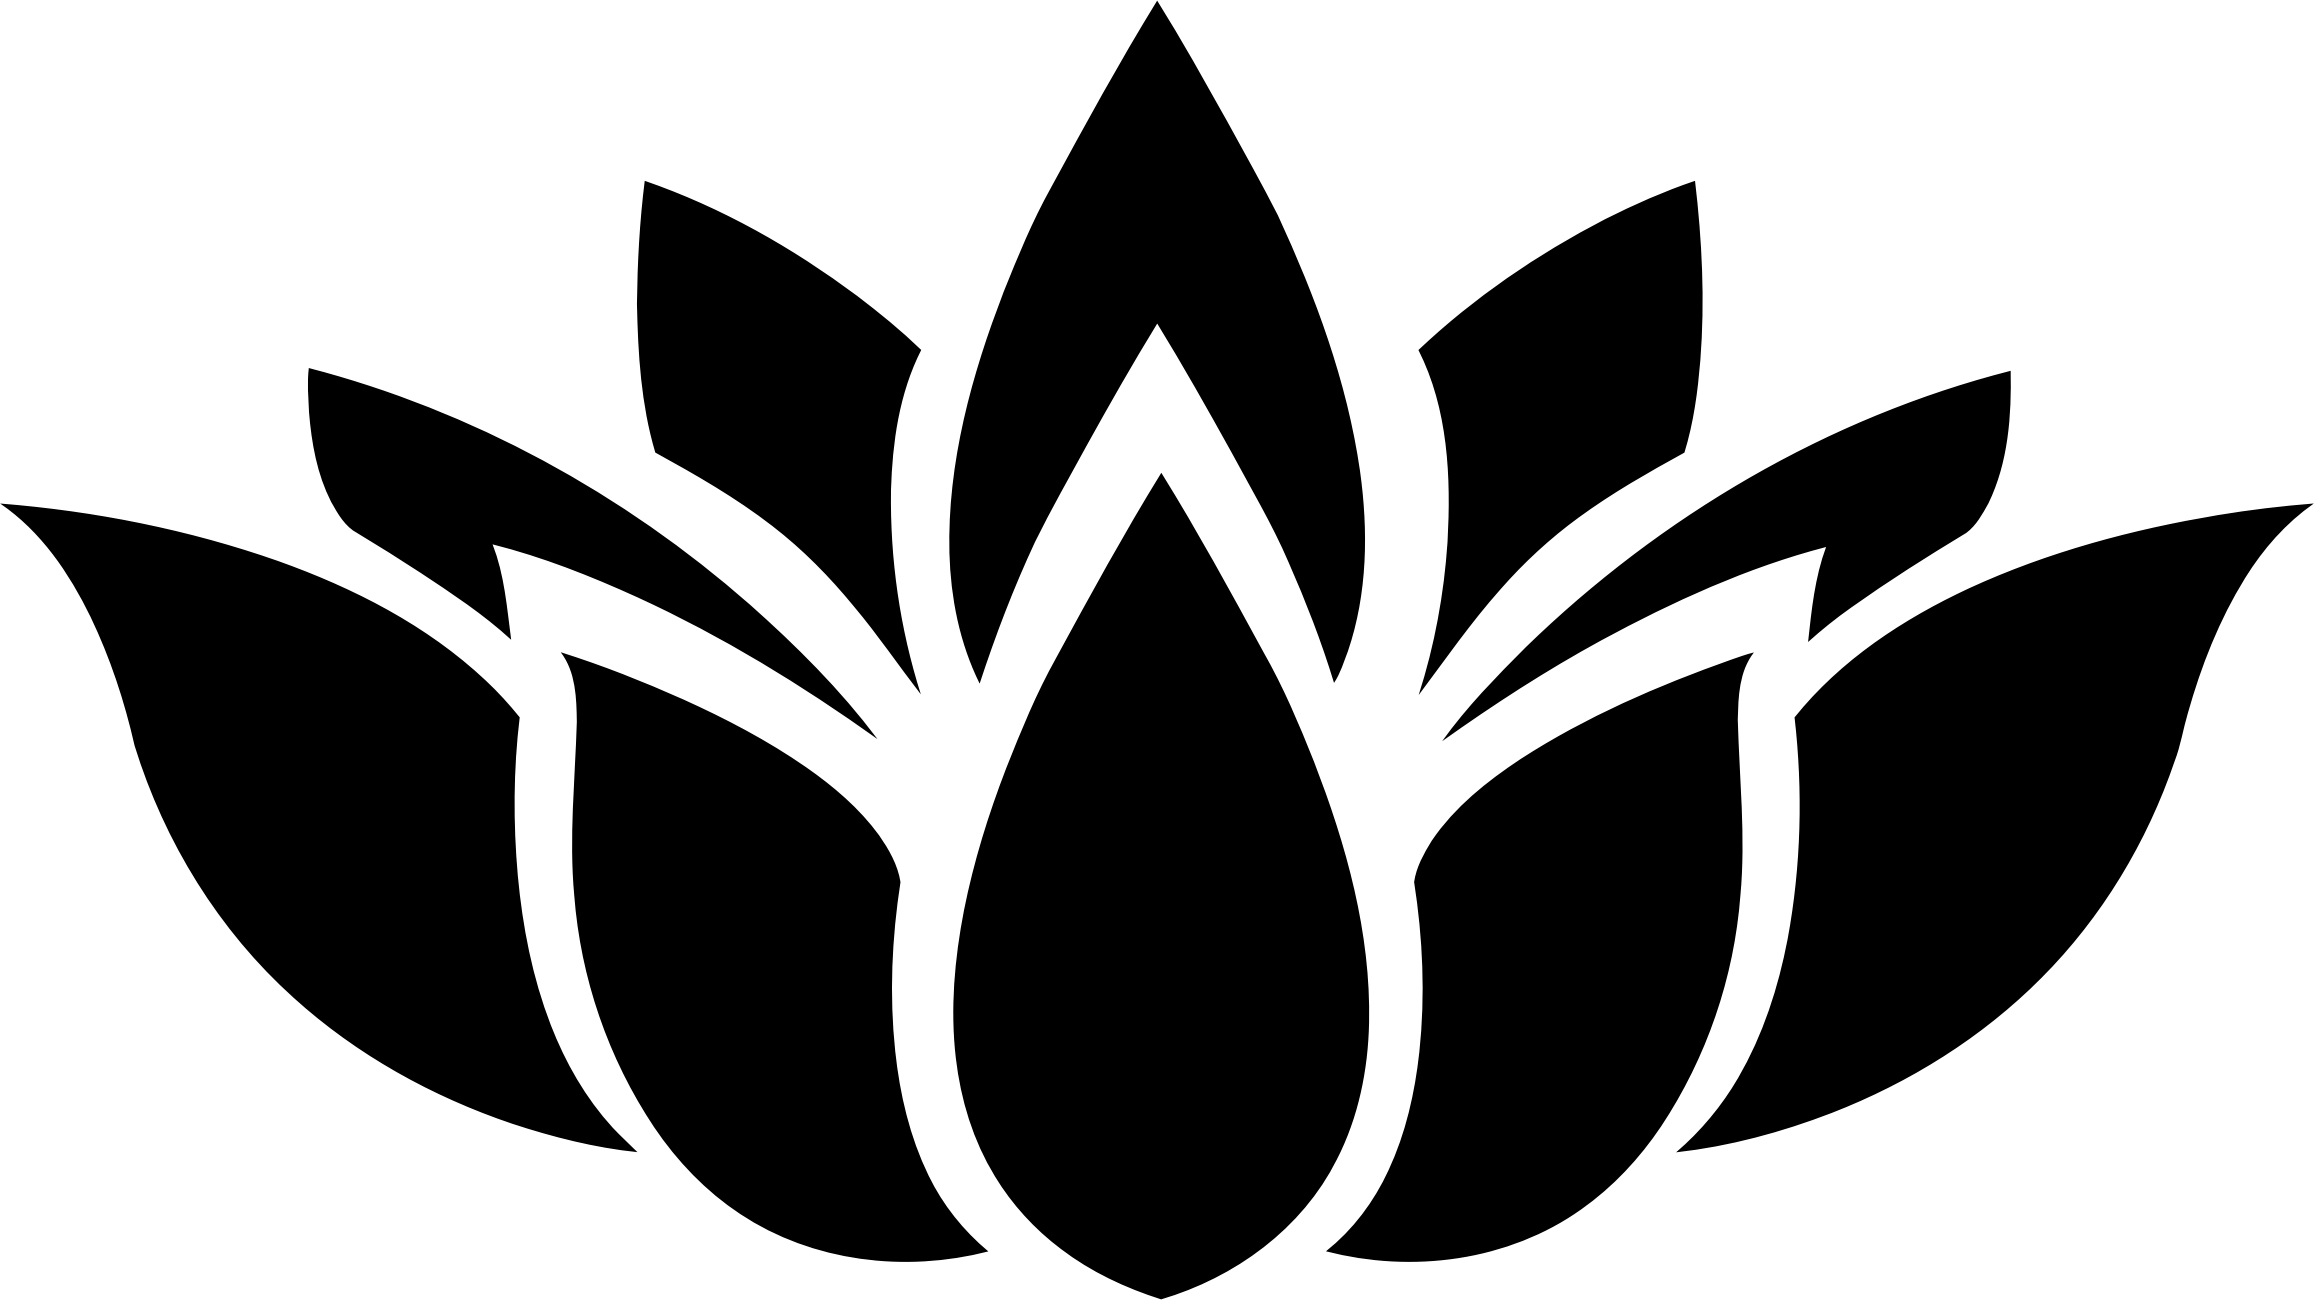 Black Lotus Flower Logo - White lotus flower clipart royalty free stock